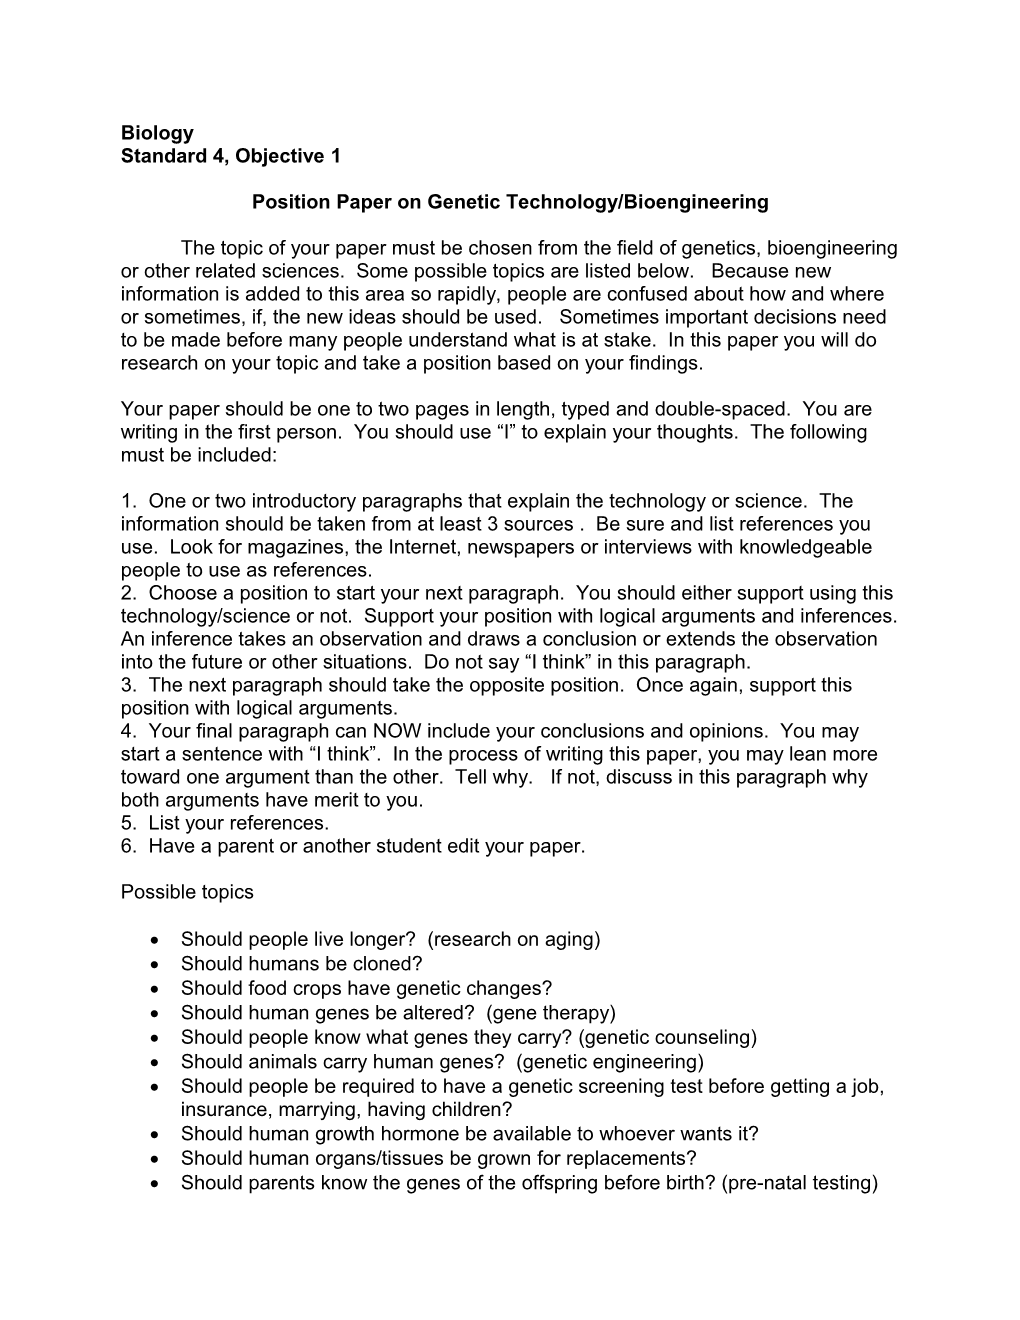 Position Paper on Genetic Technology/Bioengineering